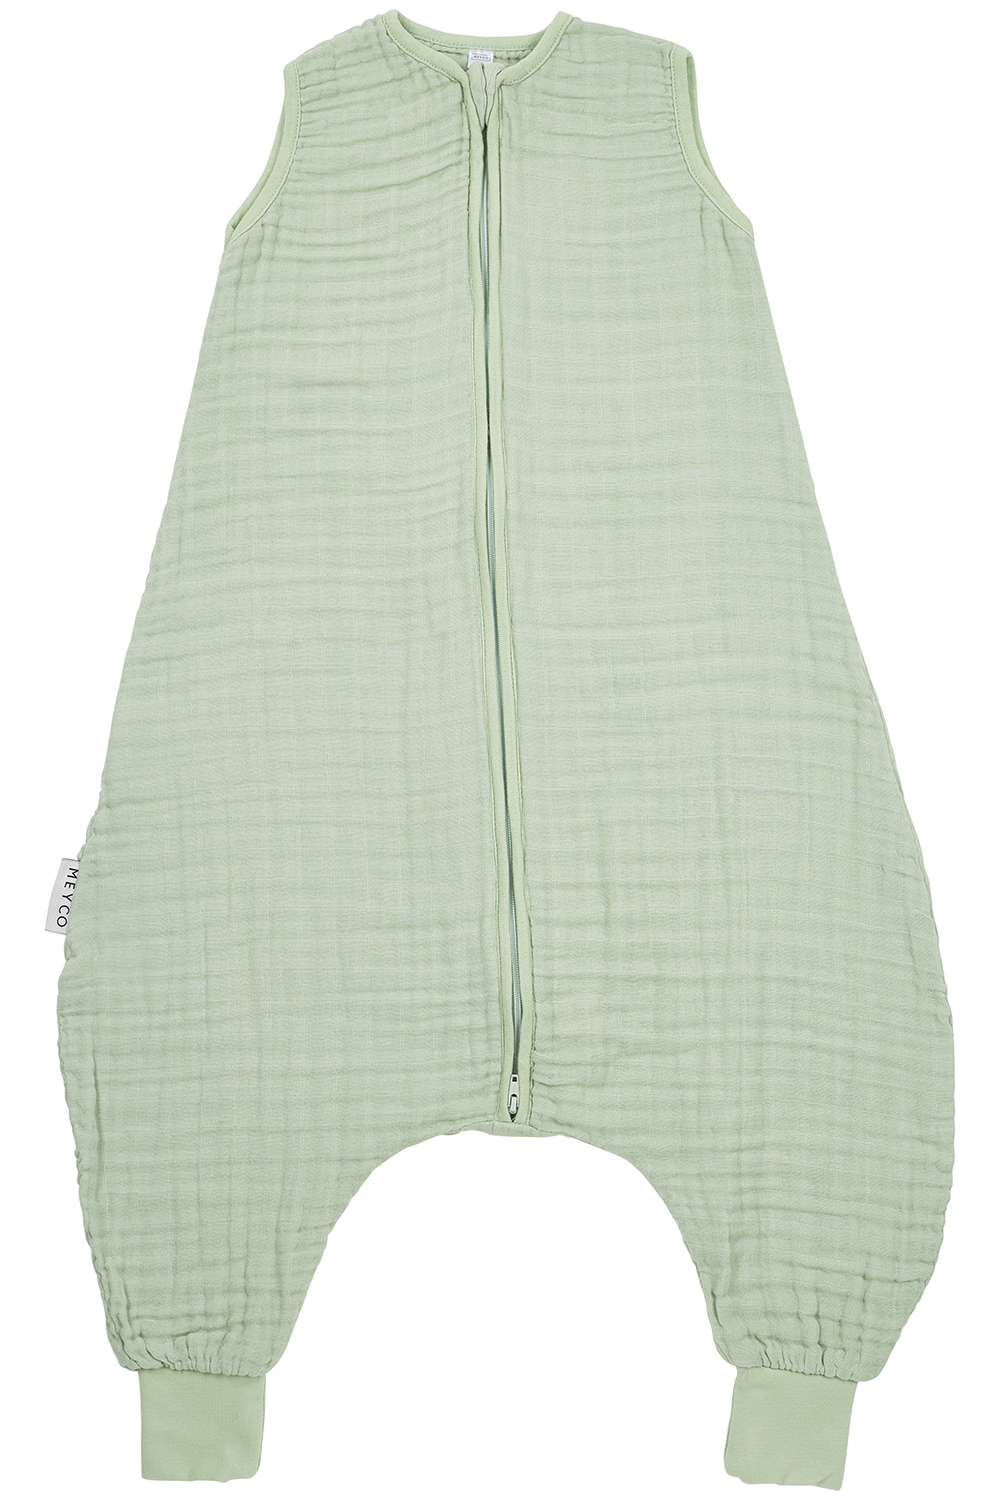 Baby summer sleep overall jumper pre-washed muslin Uni - soft green - 92cm